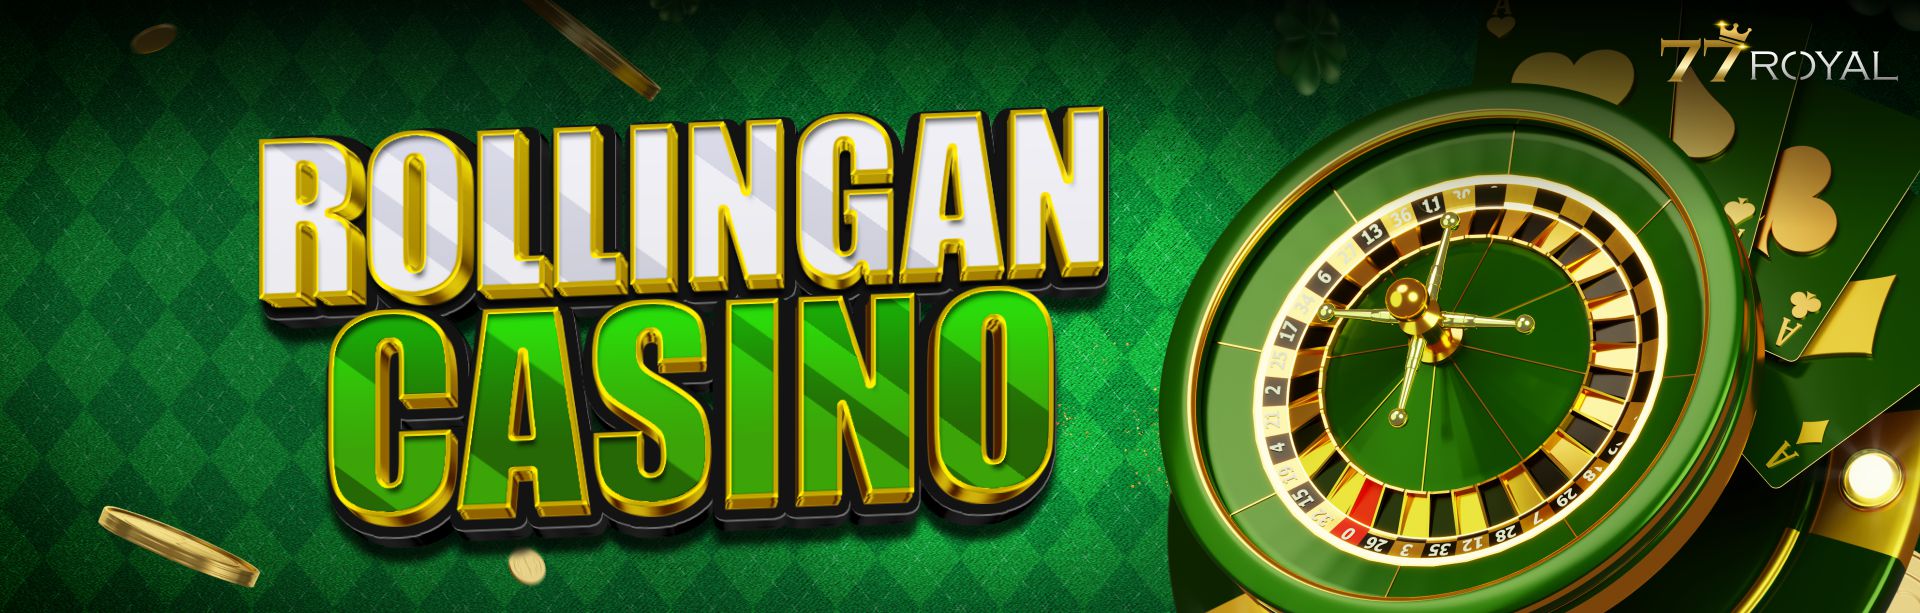 Rollingan Casino 77Royal